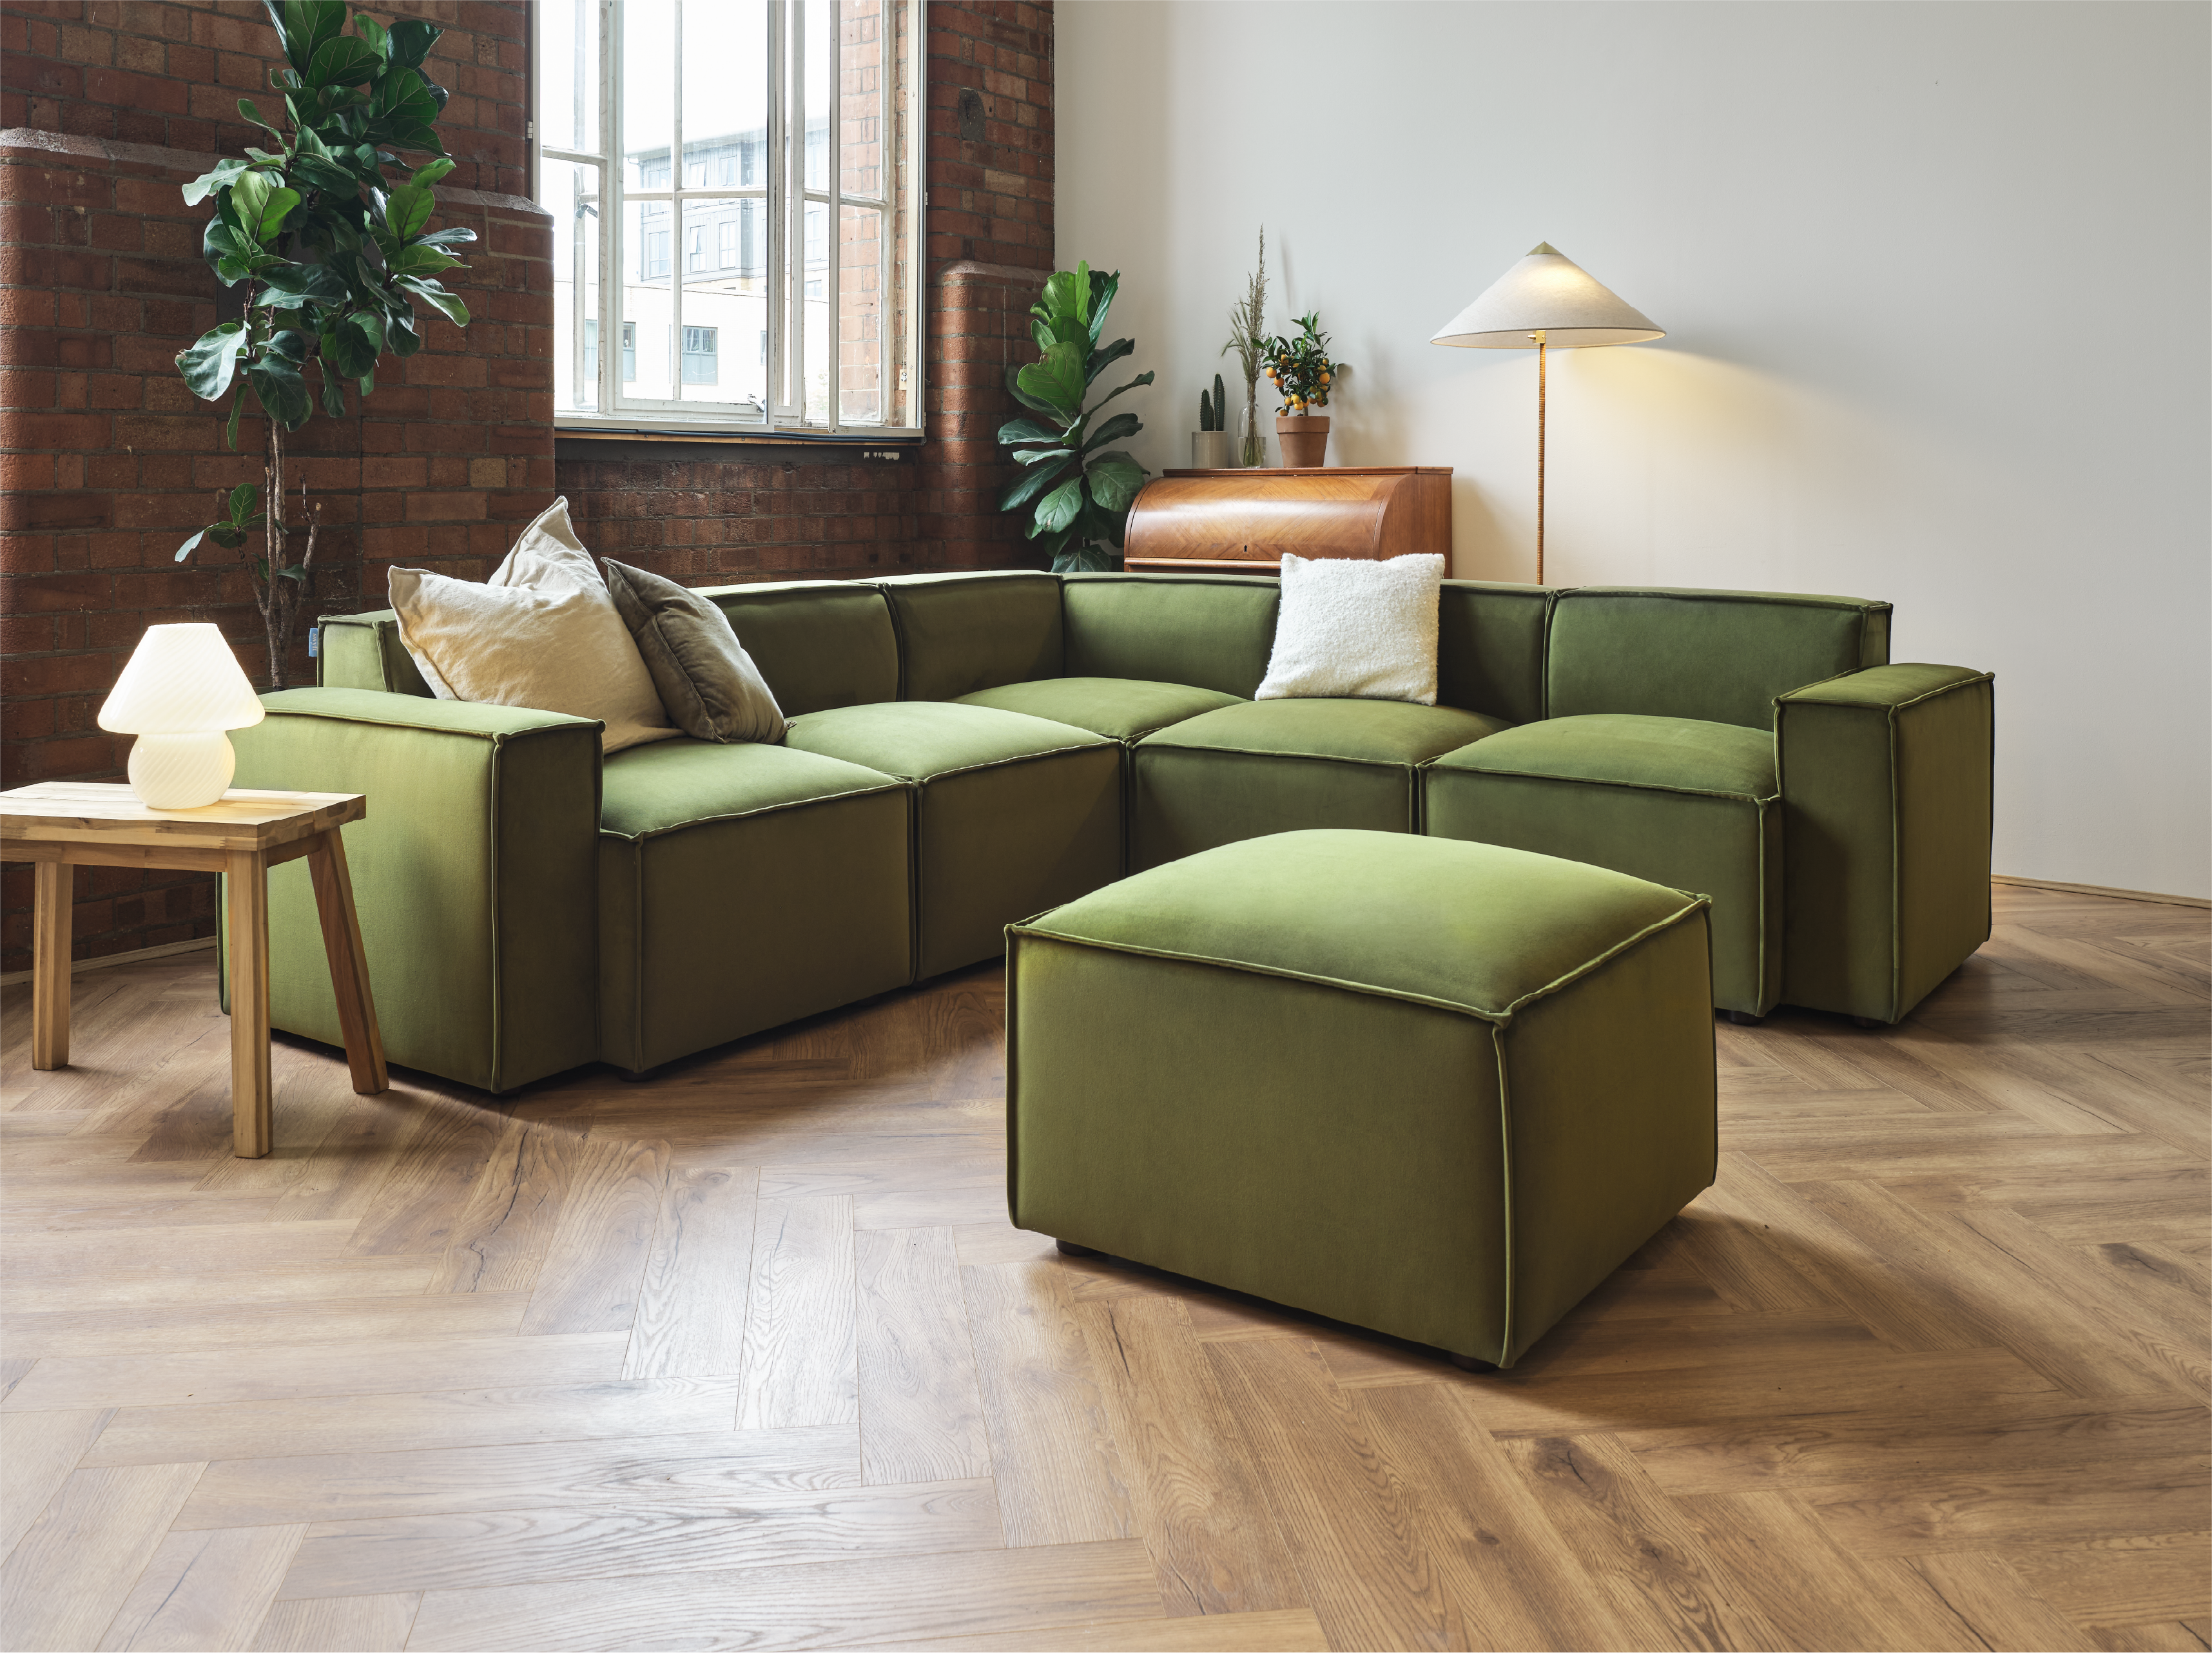 Green corner sofa with ottoman